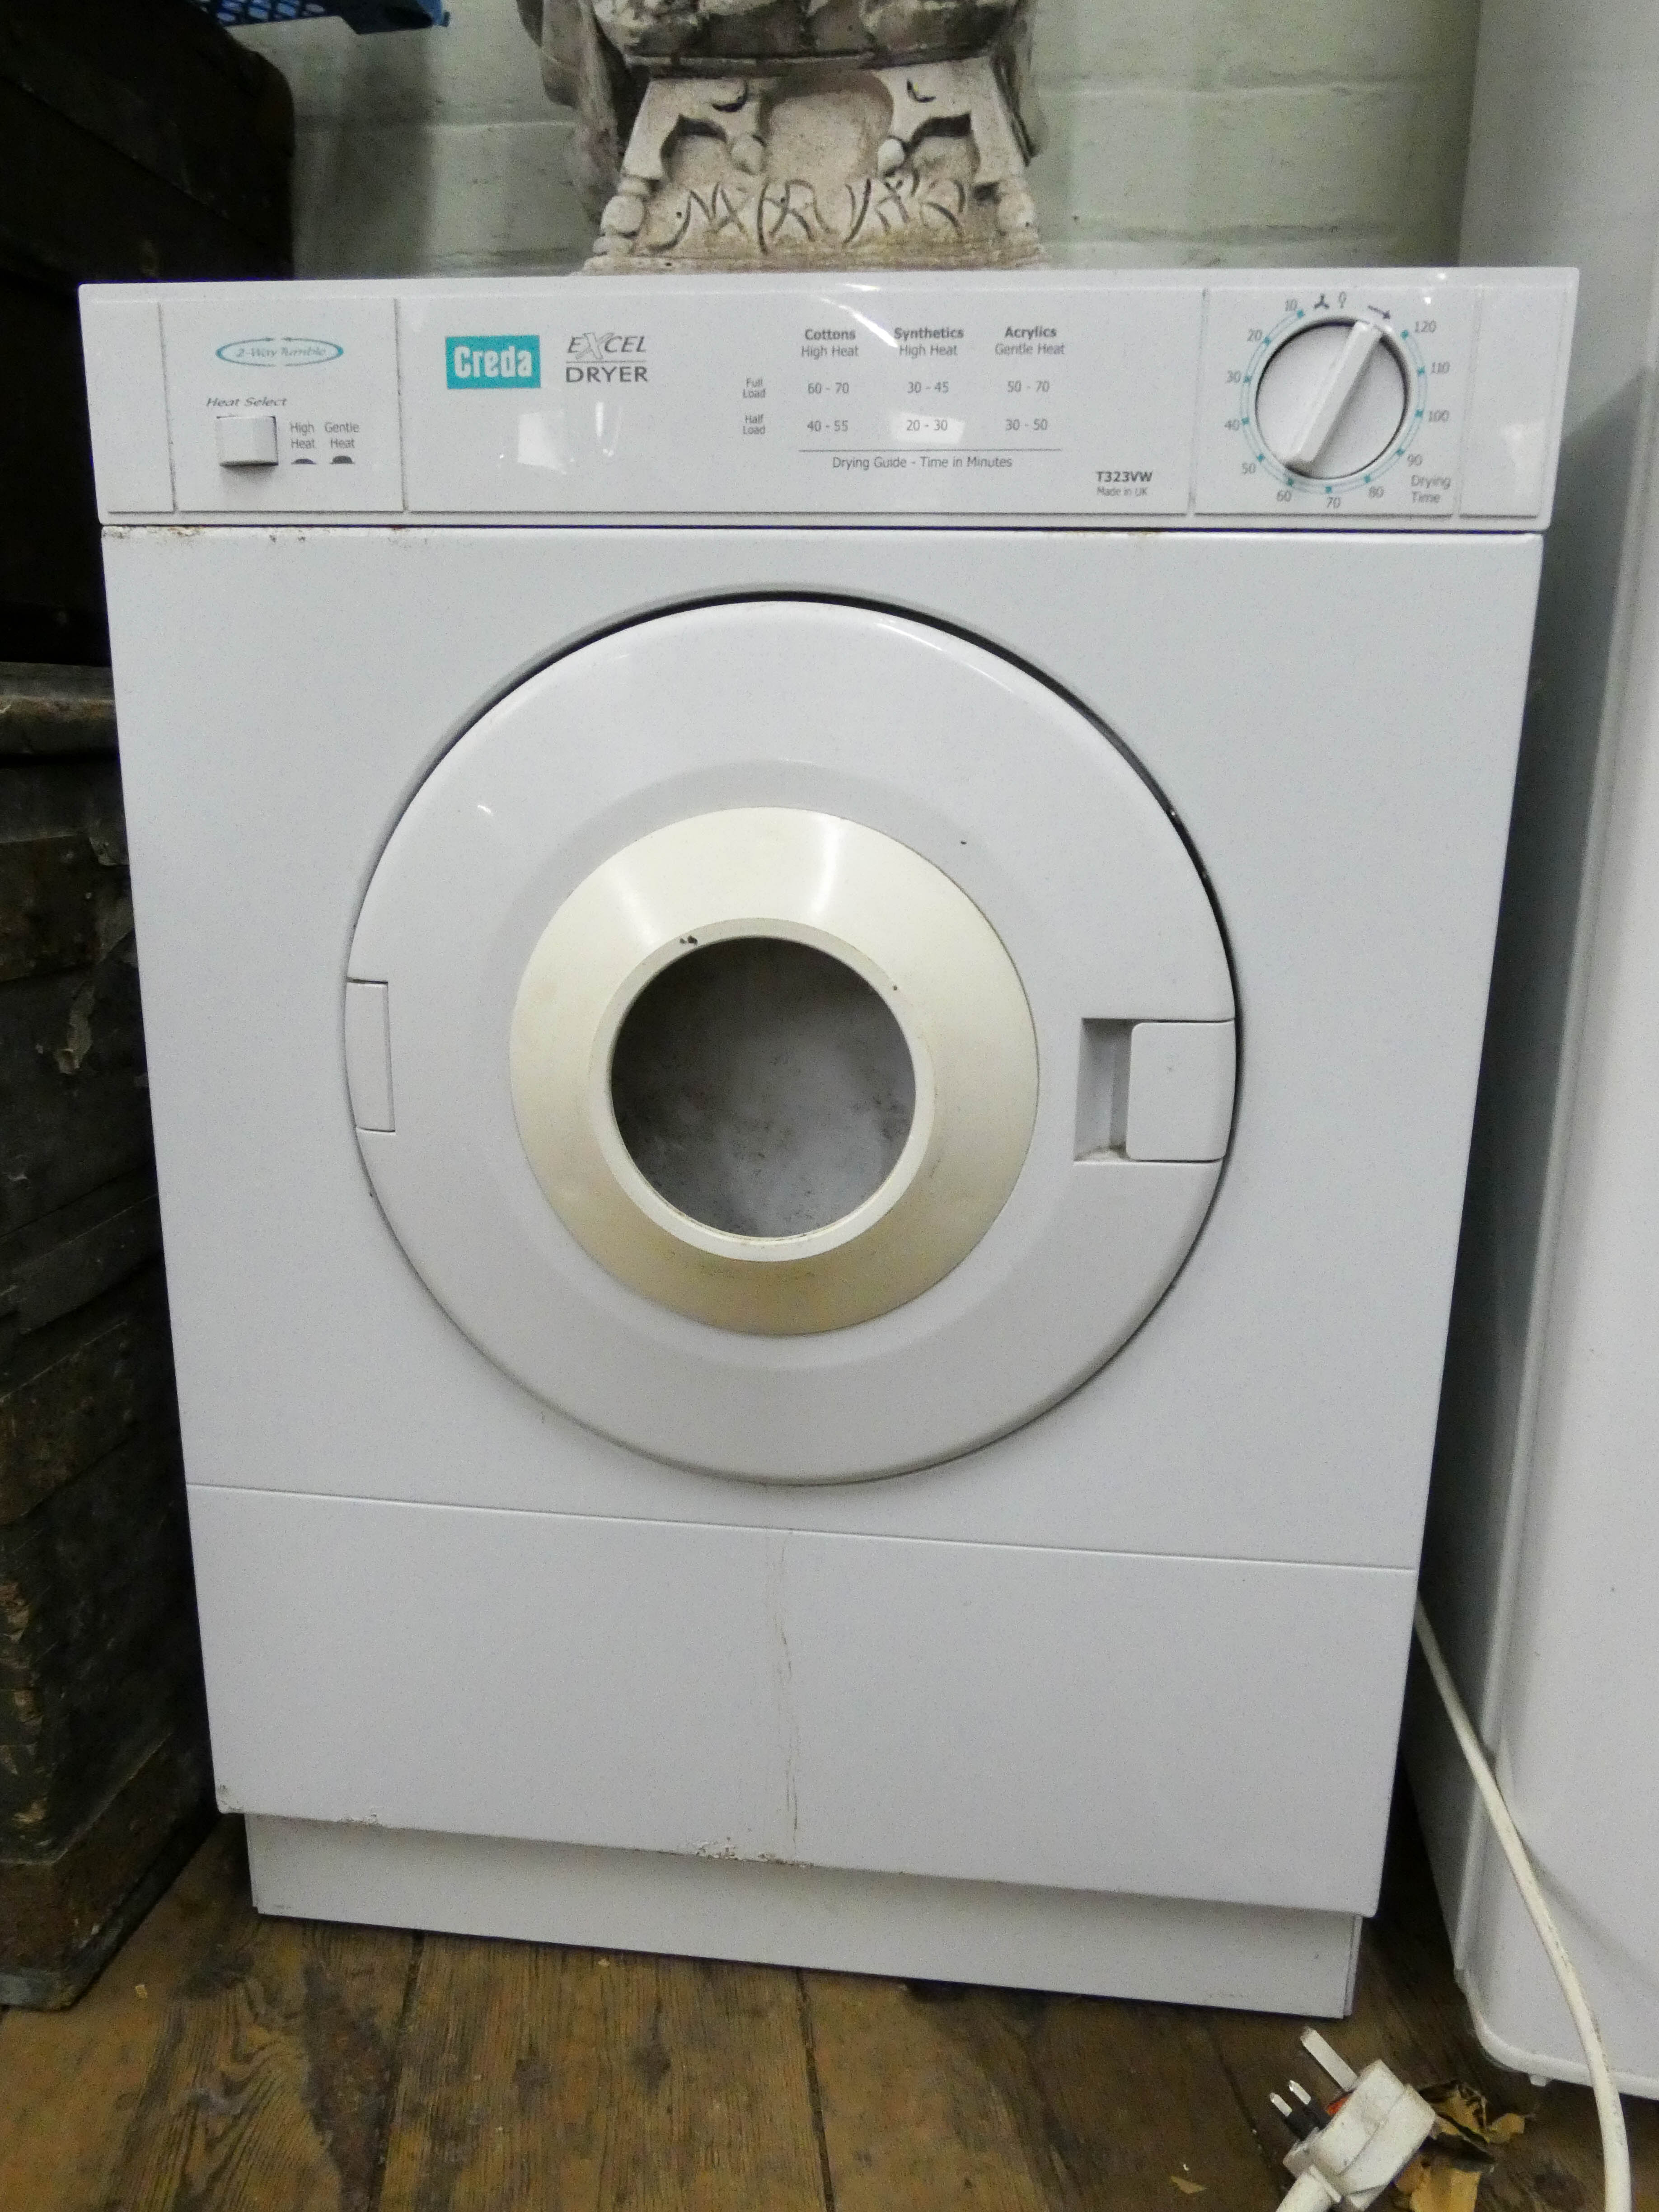 A Creda mini tumble dryer